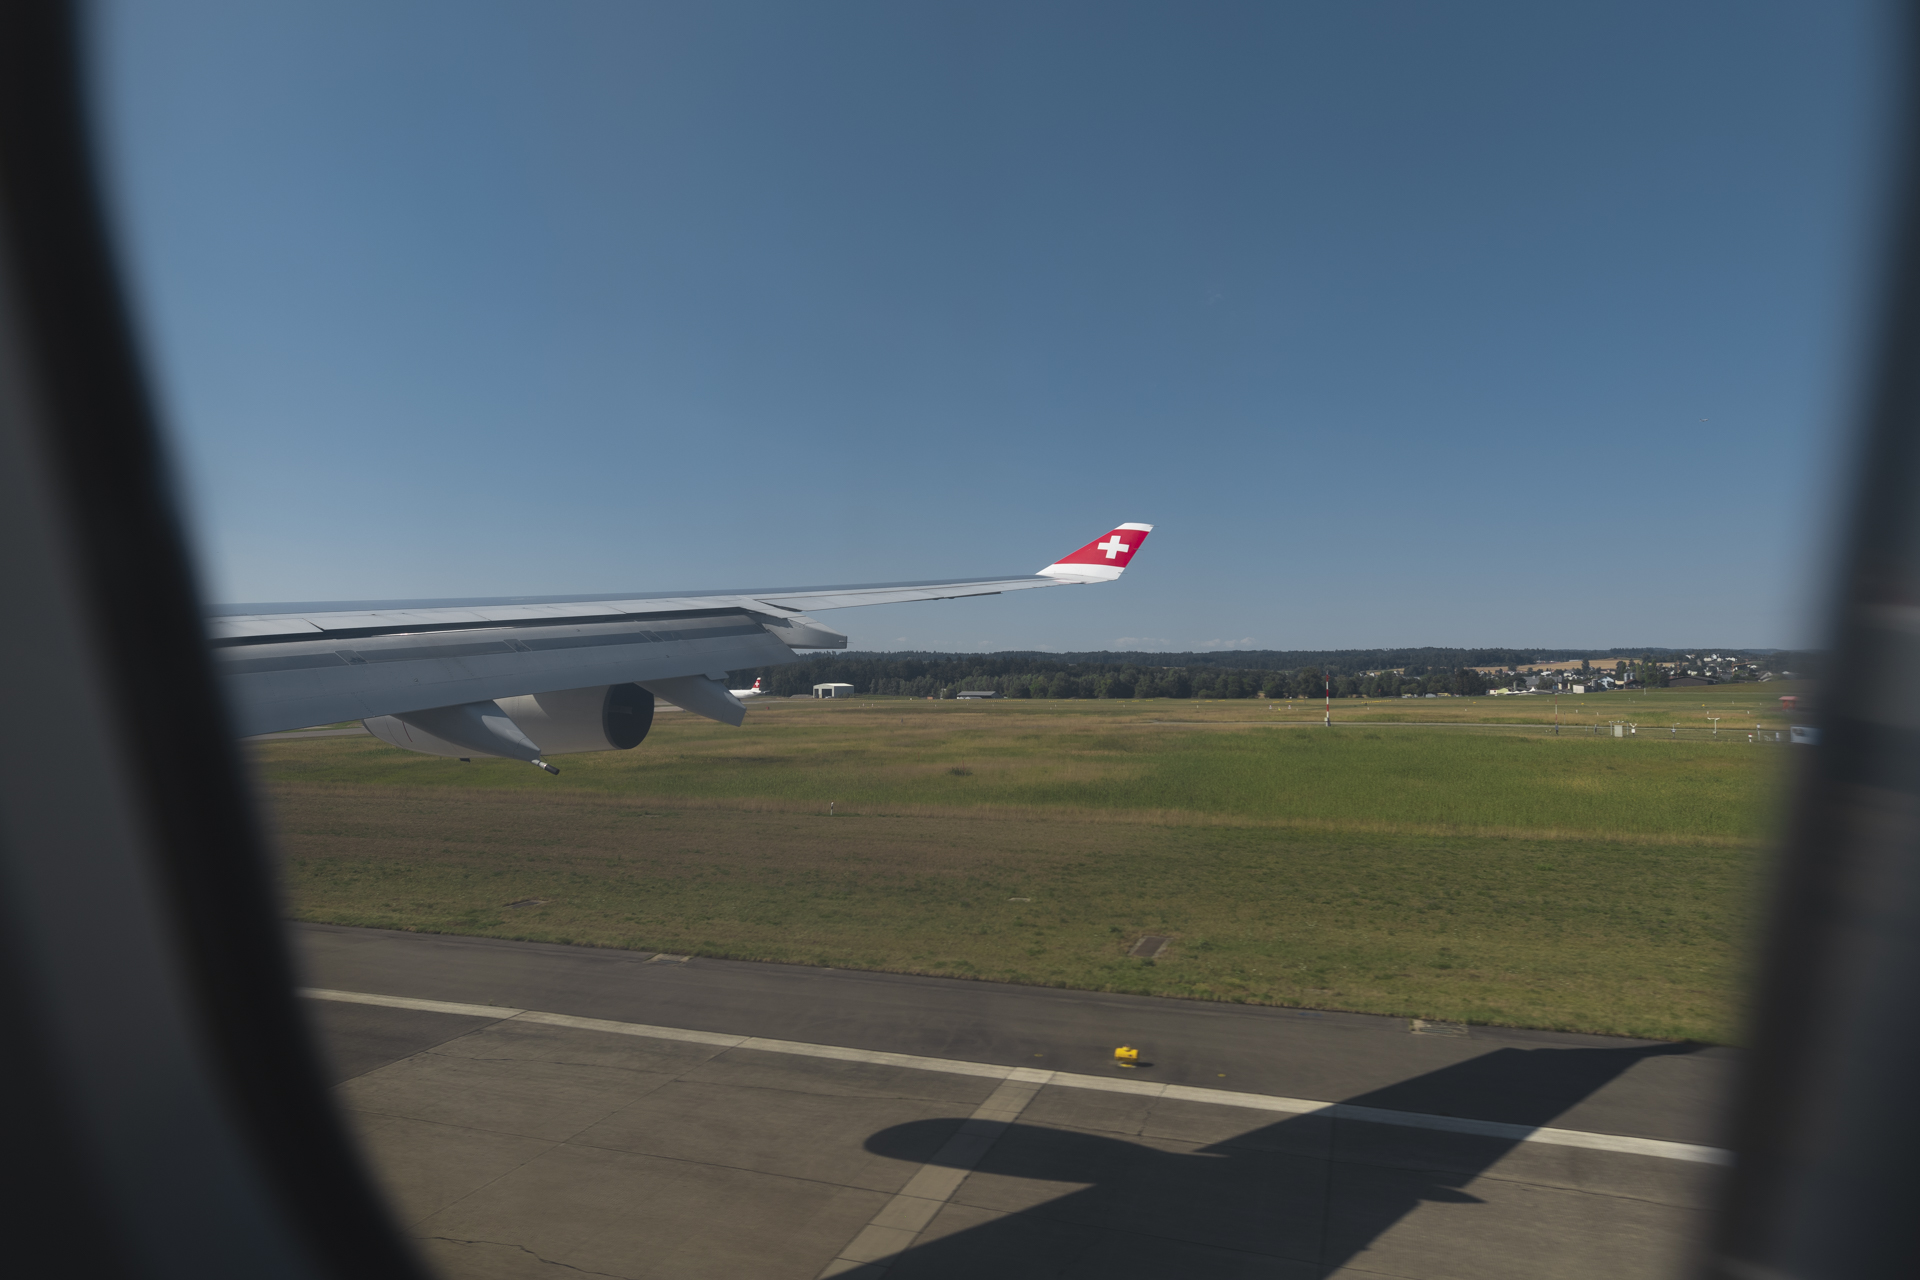 Landing on runway 14